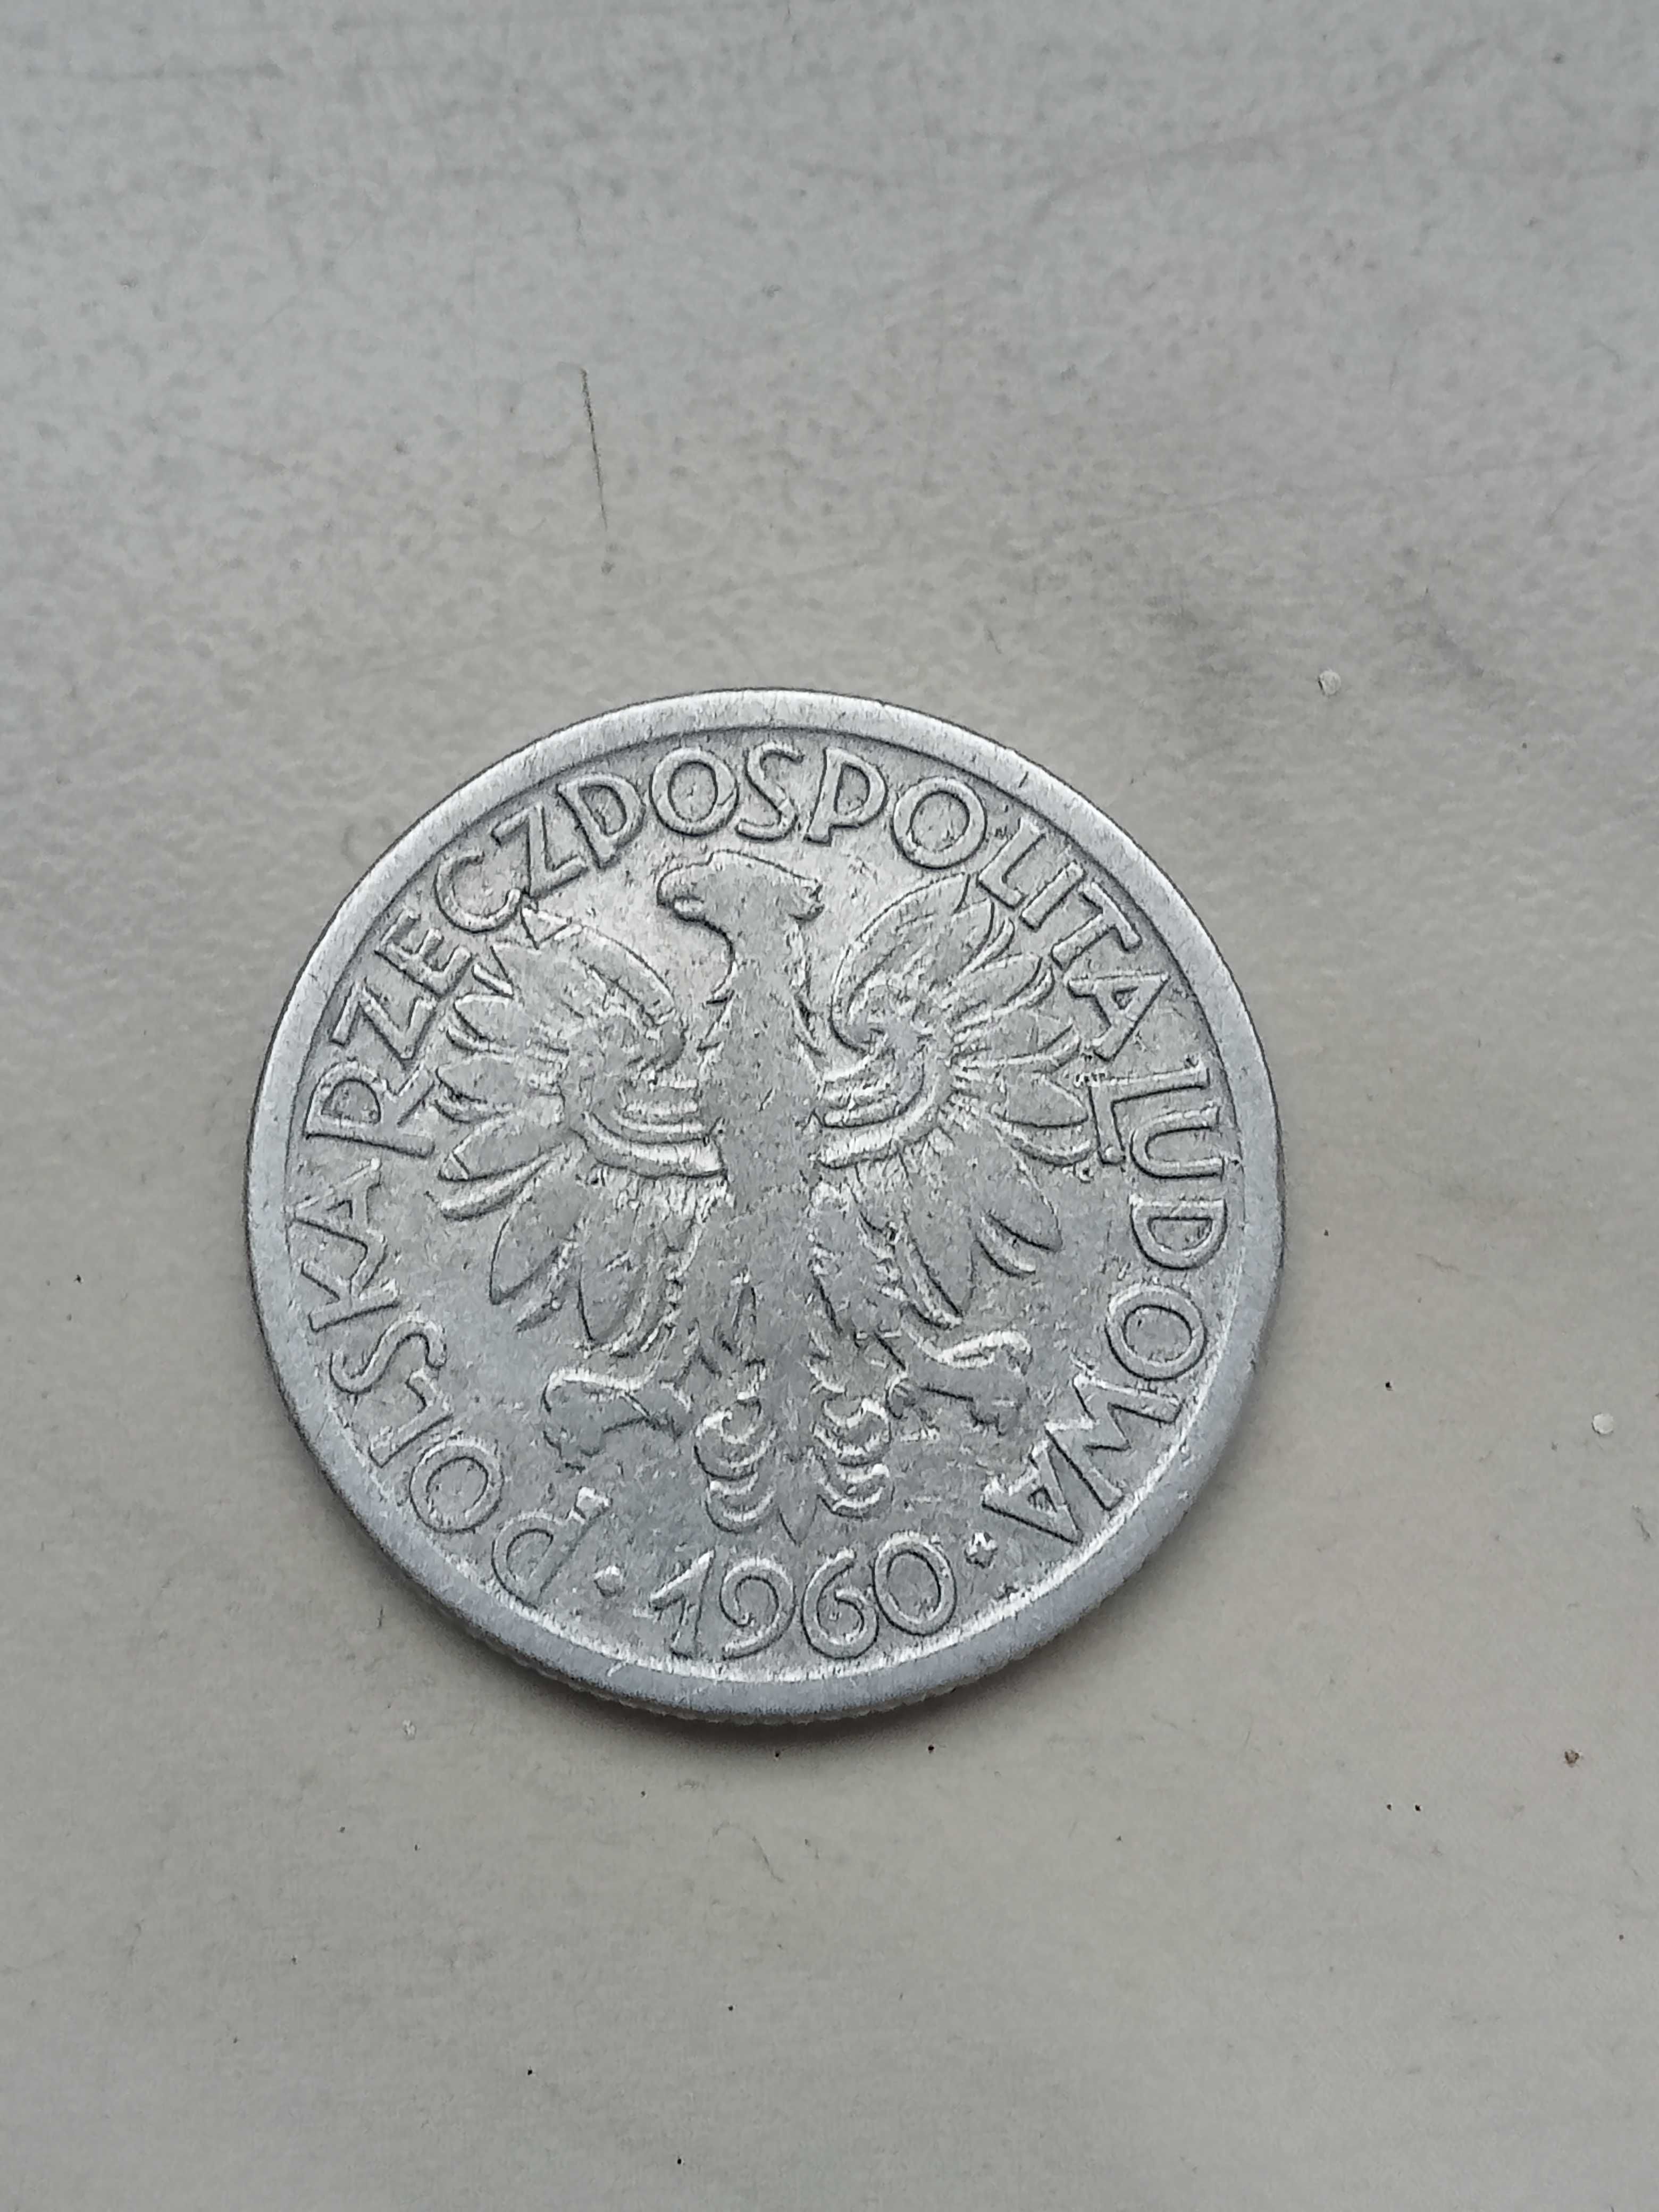 Moneta 2 zł 1960 r Jagody